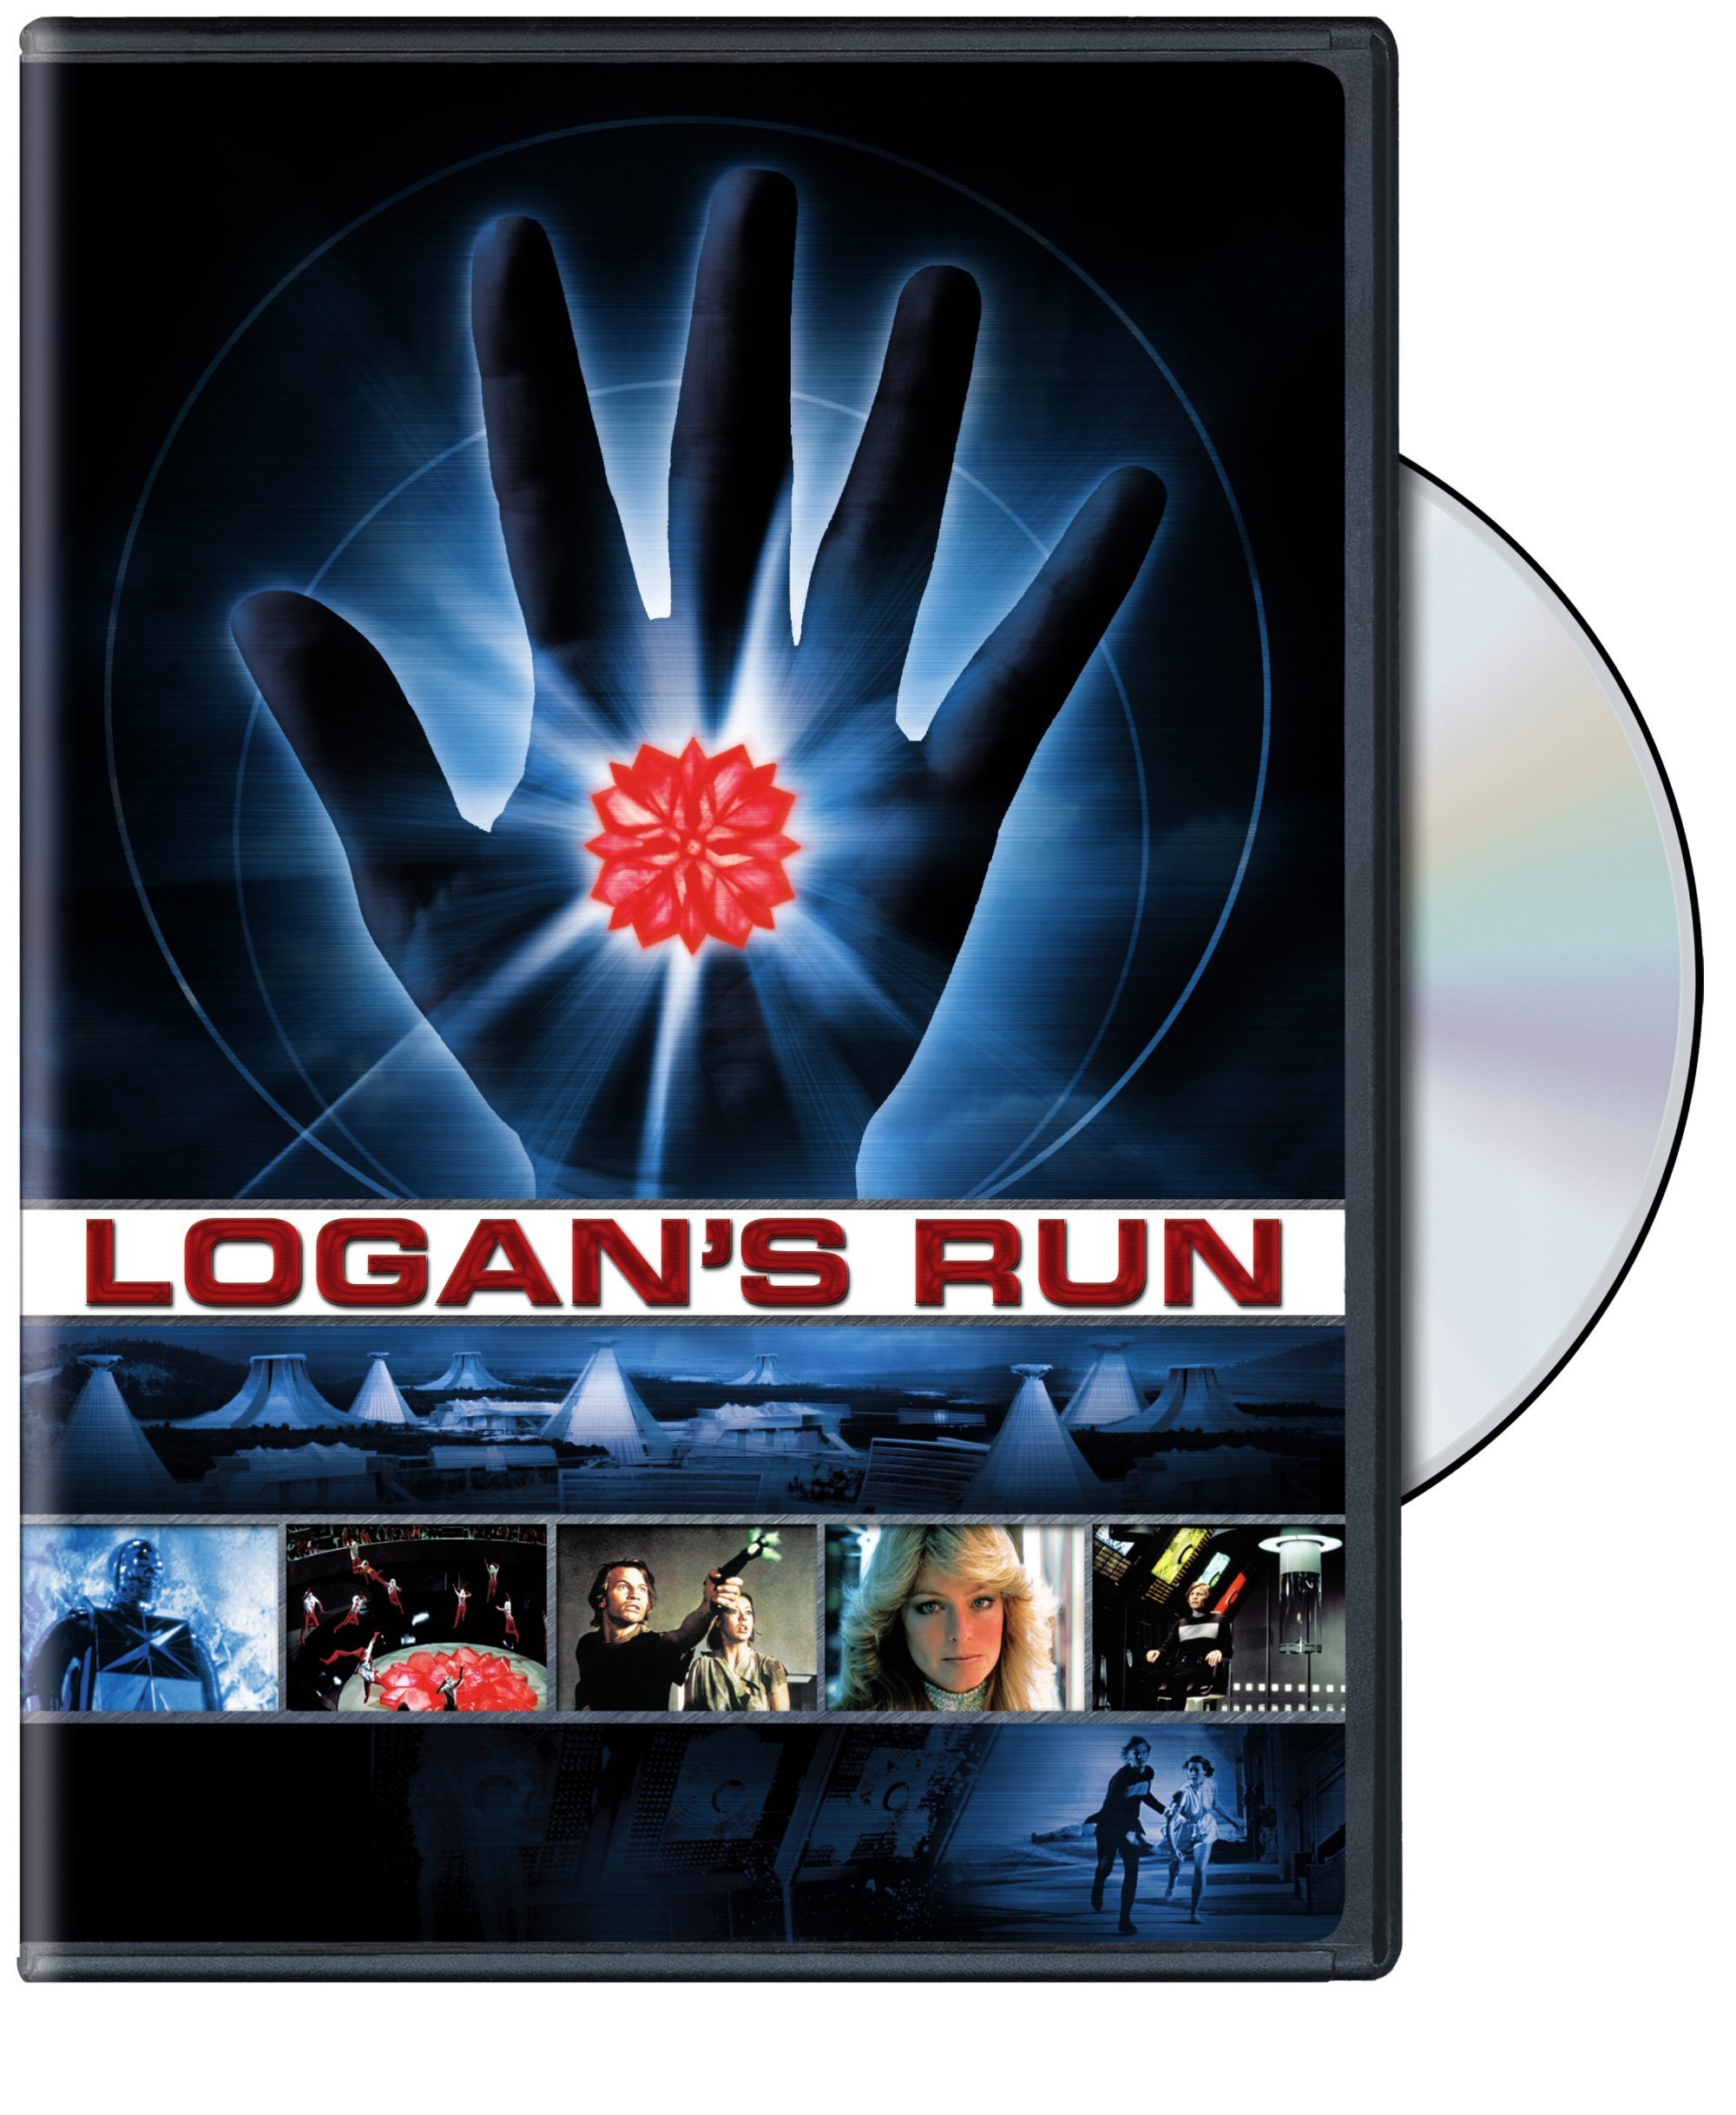 Logan's Run (DVD Widescreen) - DVD [ 1976 ]  - Sci Fi Movies On DVD - Movies On GRUV